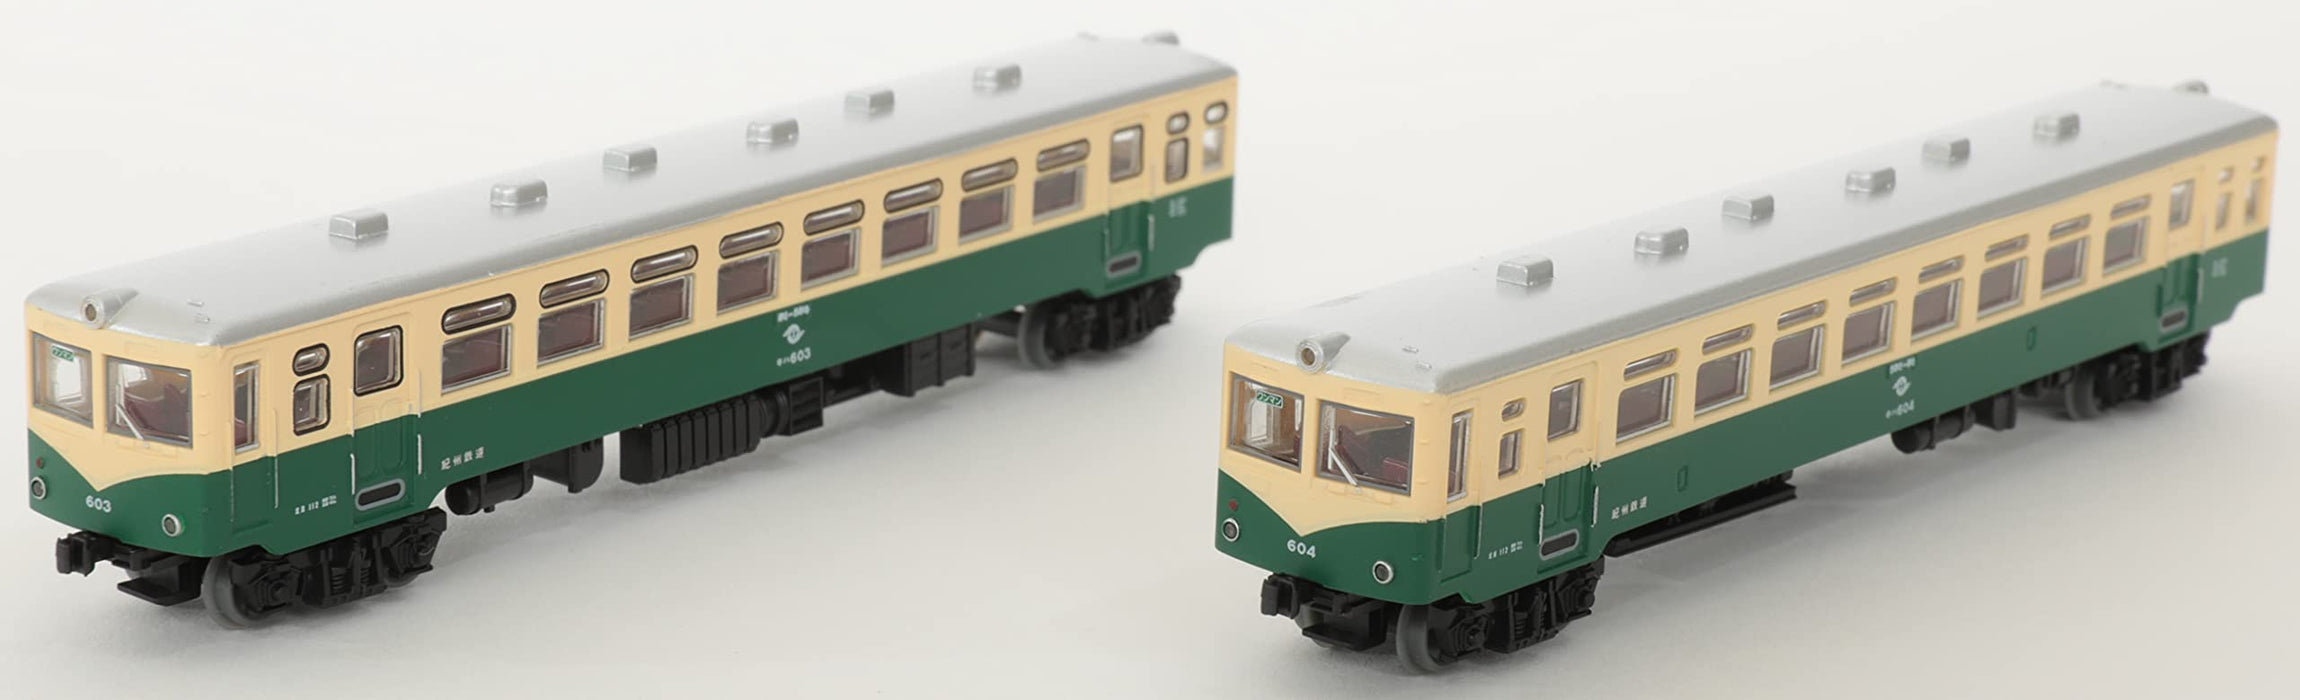 Tomytec Railway Collection Iron Kishu Kiha 600 Spätes Modell 2-Wagen-Set Diorama 317890